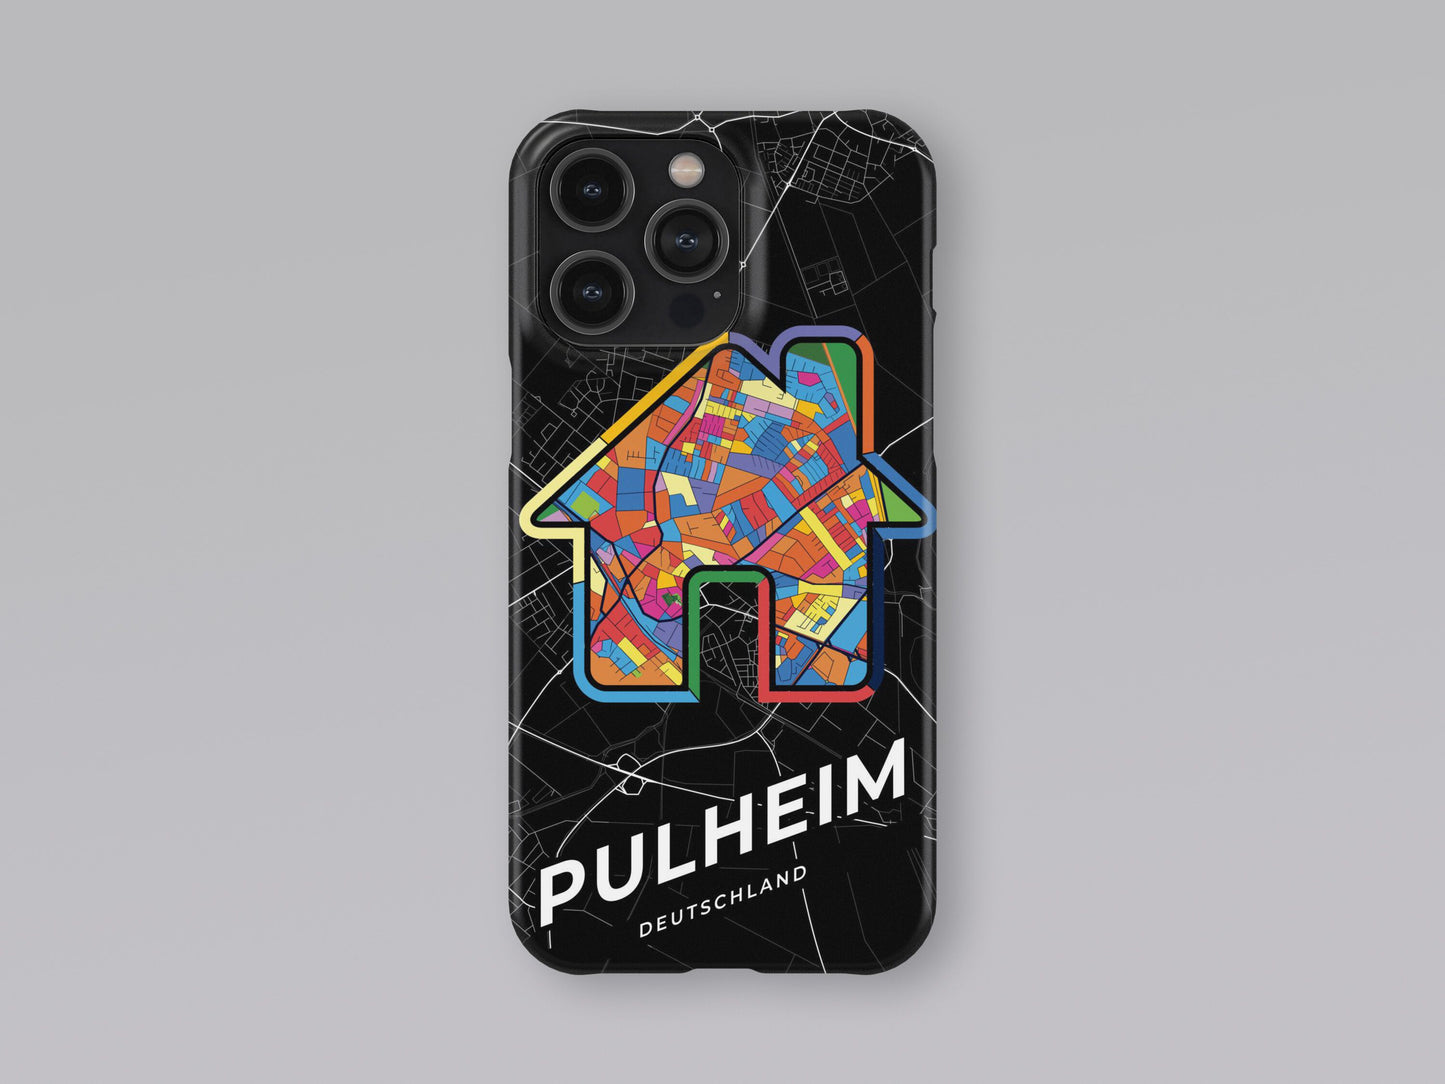 Pulheim Deutschland slim phone case with colorful icon. Birthday, wedding or housewarming gift. Couple match cases. 3